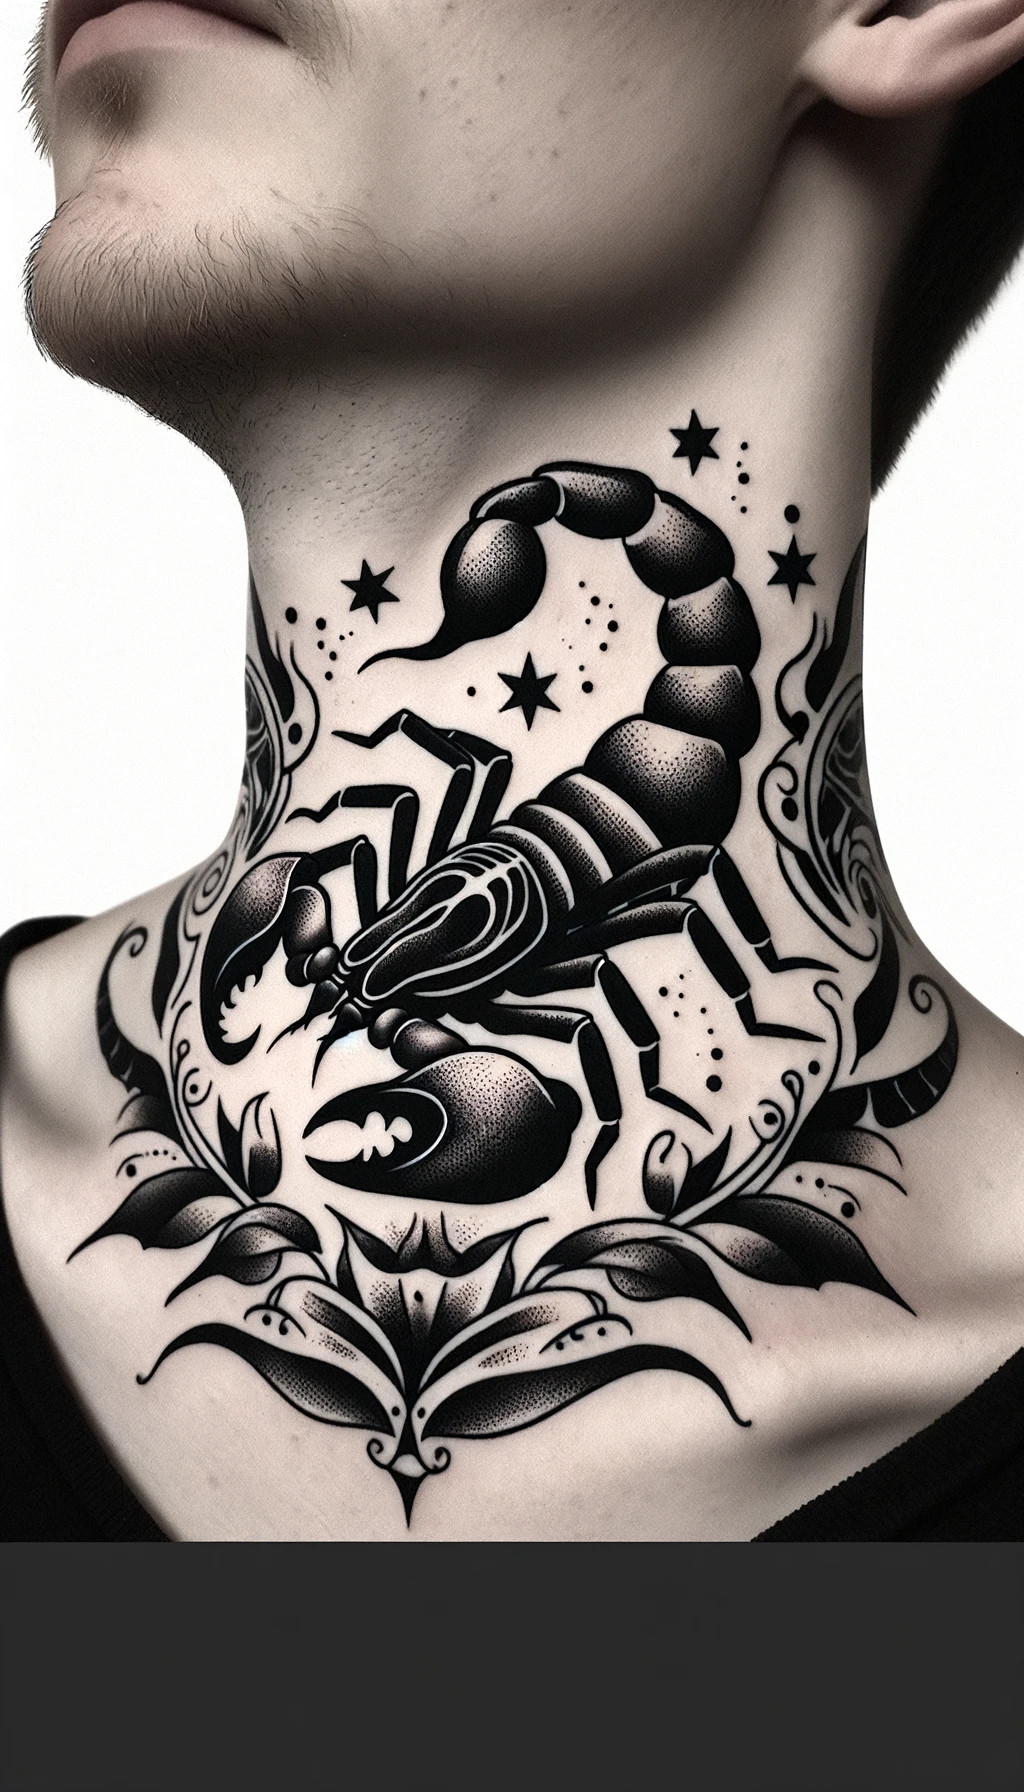 Is this tattoo design basic? : r/TattooDesigns